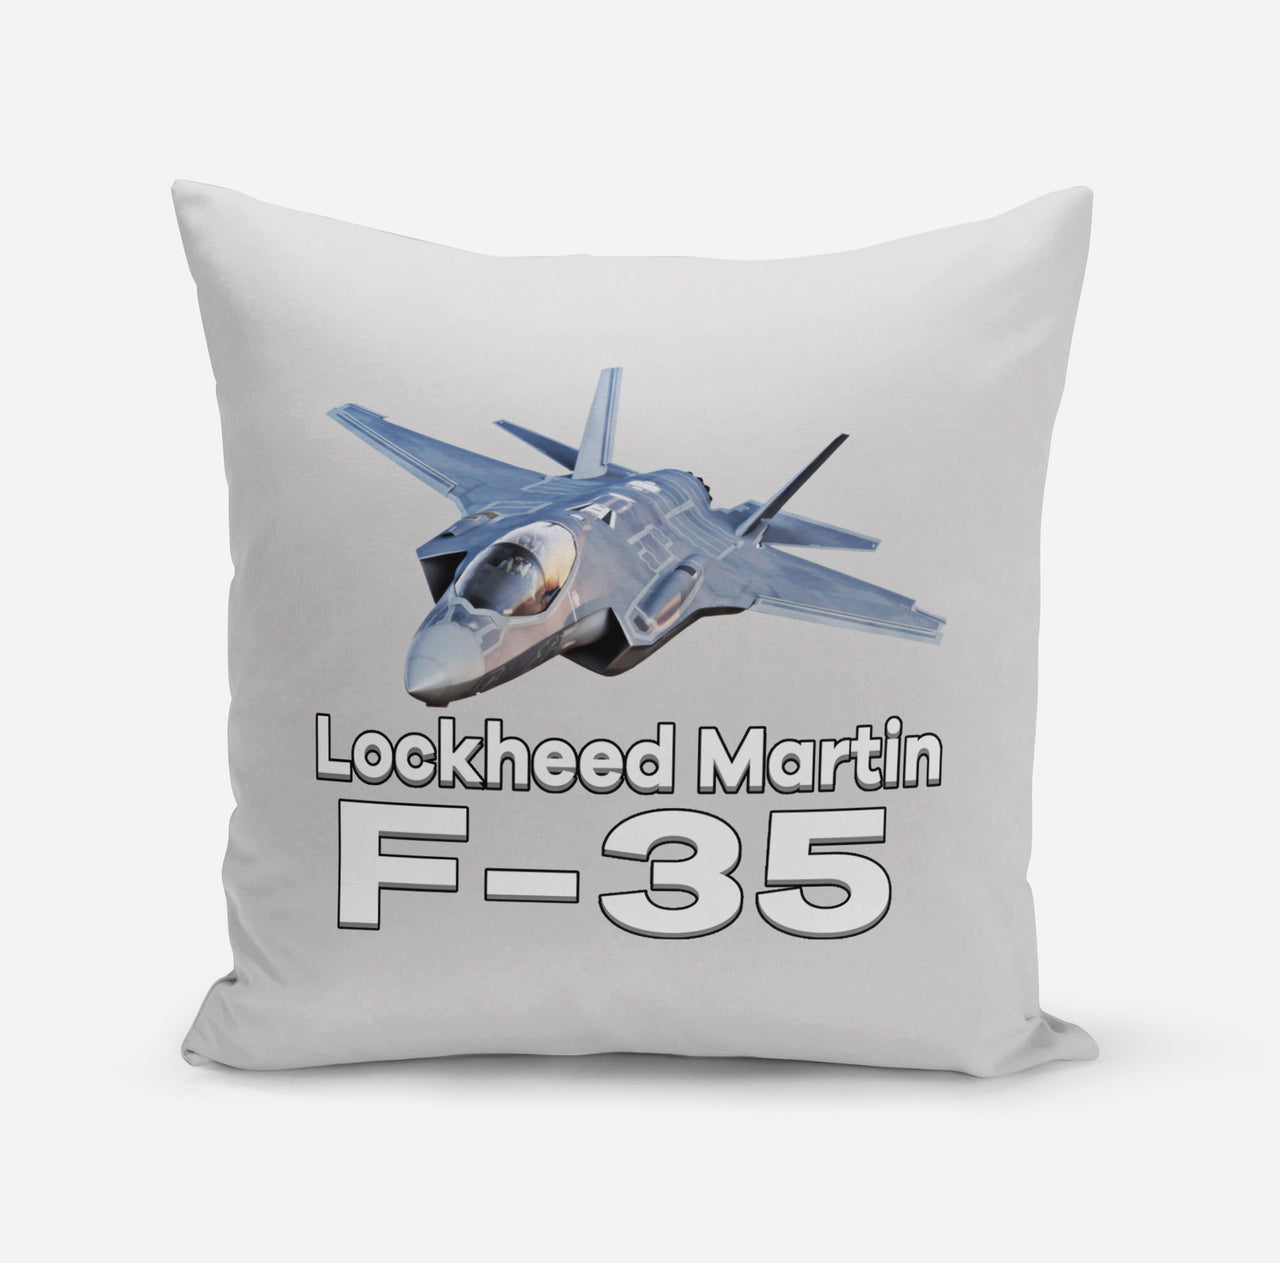 The Lockheed Martin F35 Designed Pillows